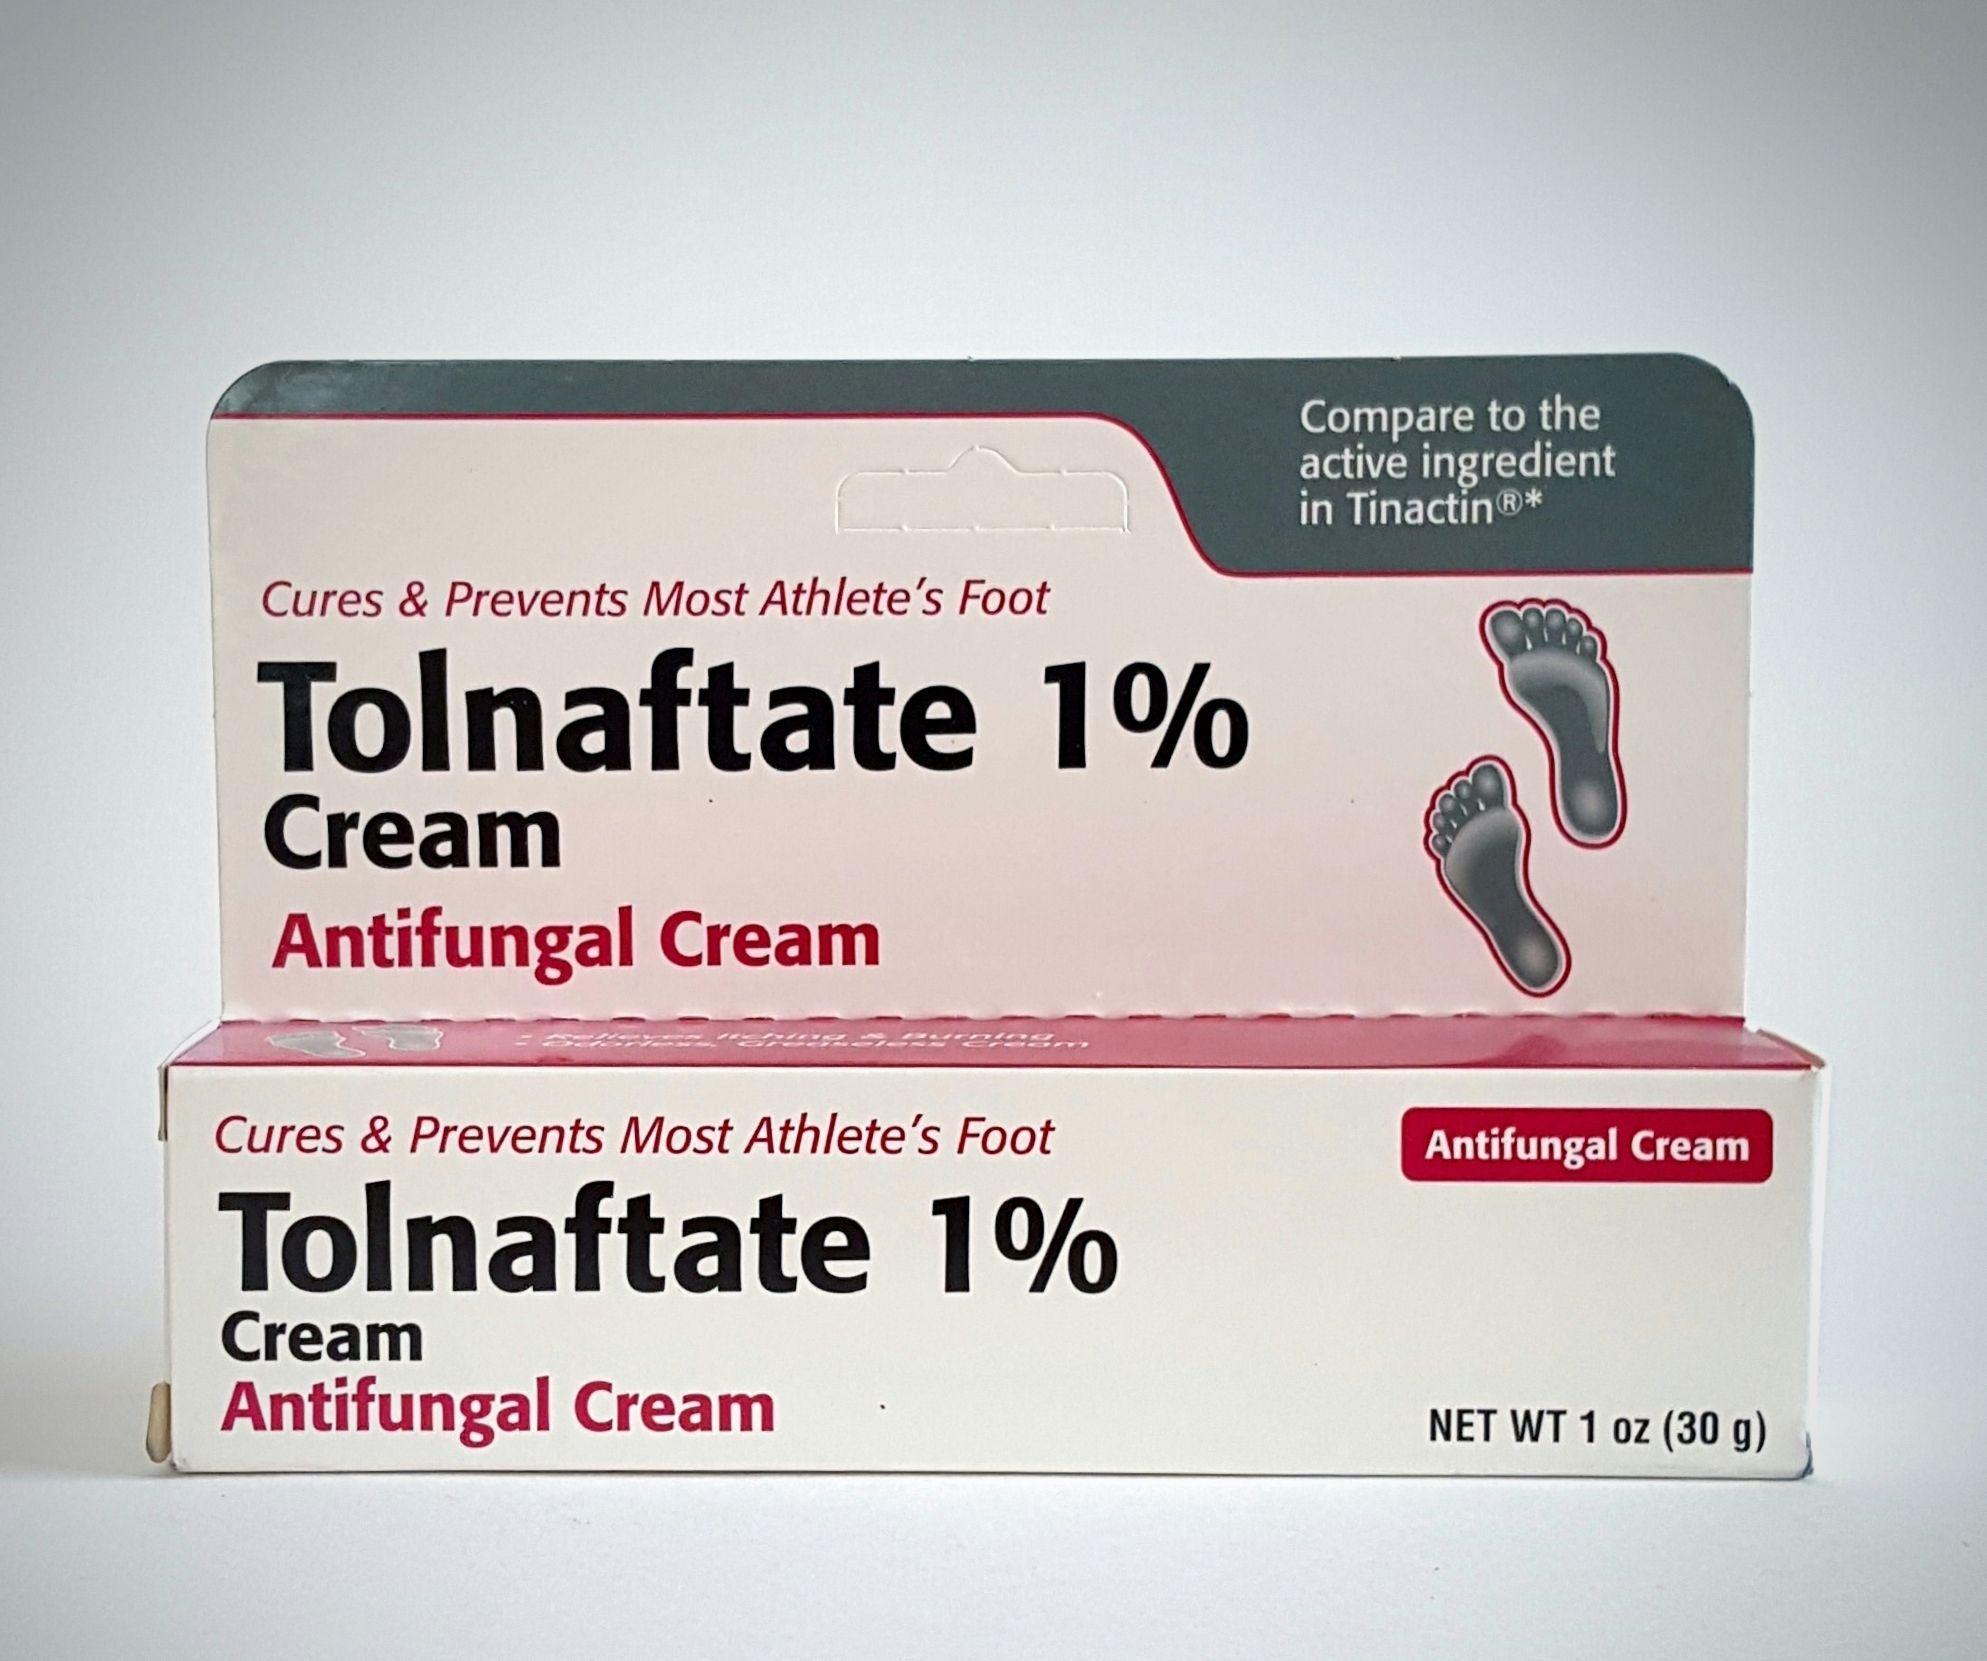 TaroPharma Logo - Details about TOLNAFTATE 1% Antifungal Cream (compare to Tinactin) by Taro  Pharma - 15 or 30gm